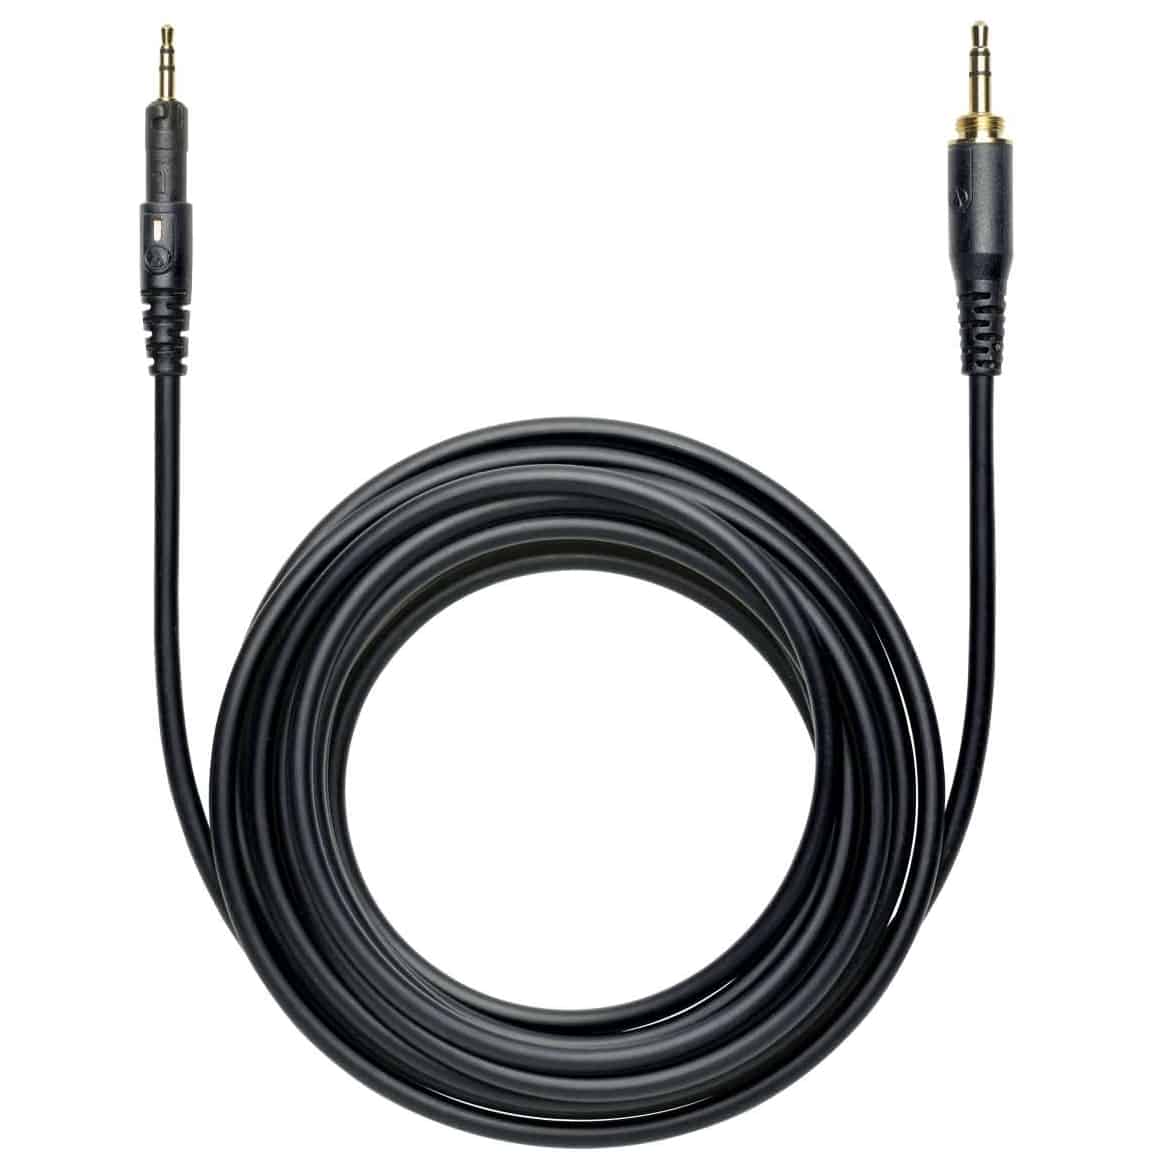 Audio Technica ATH-M50x Kabel gerade 3m